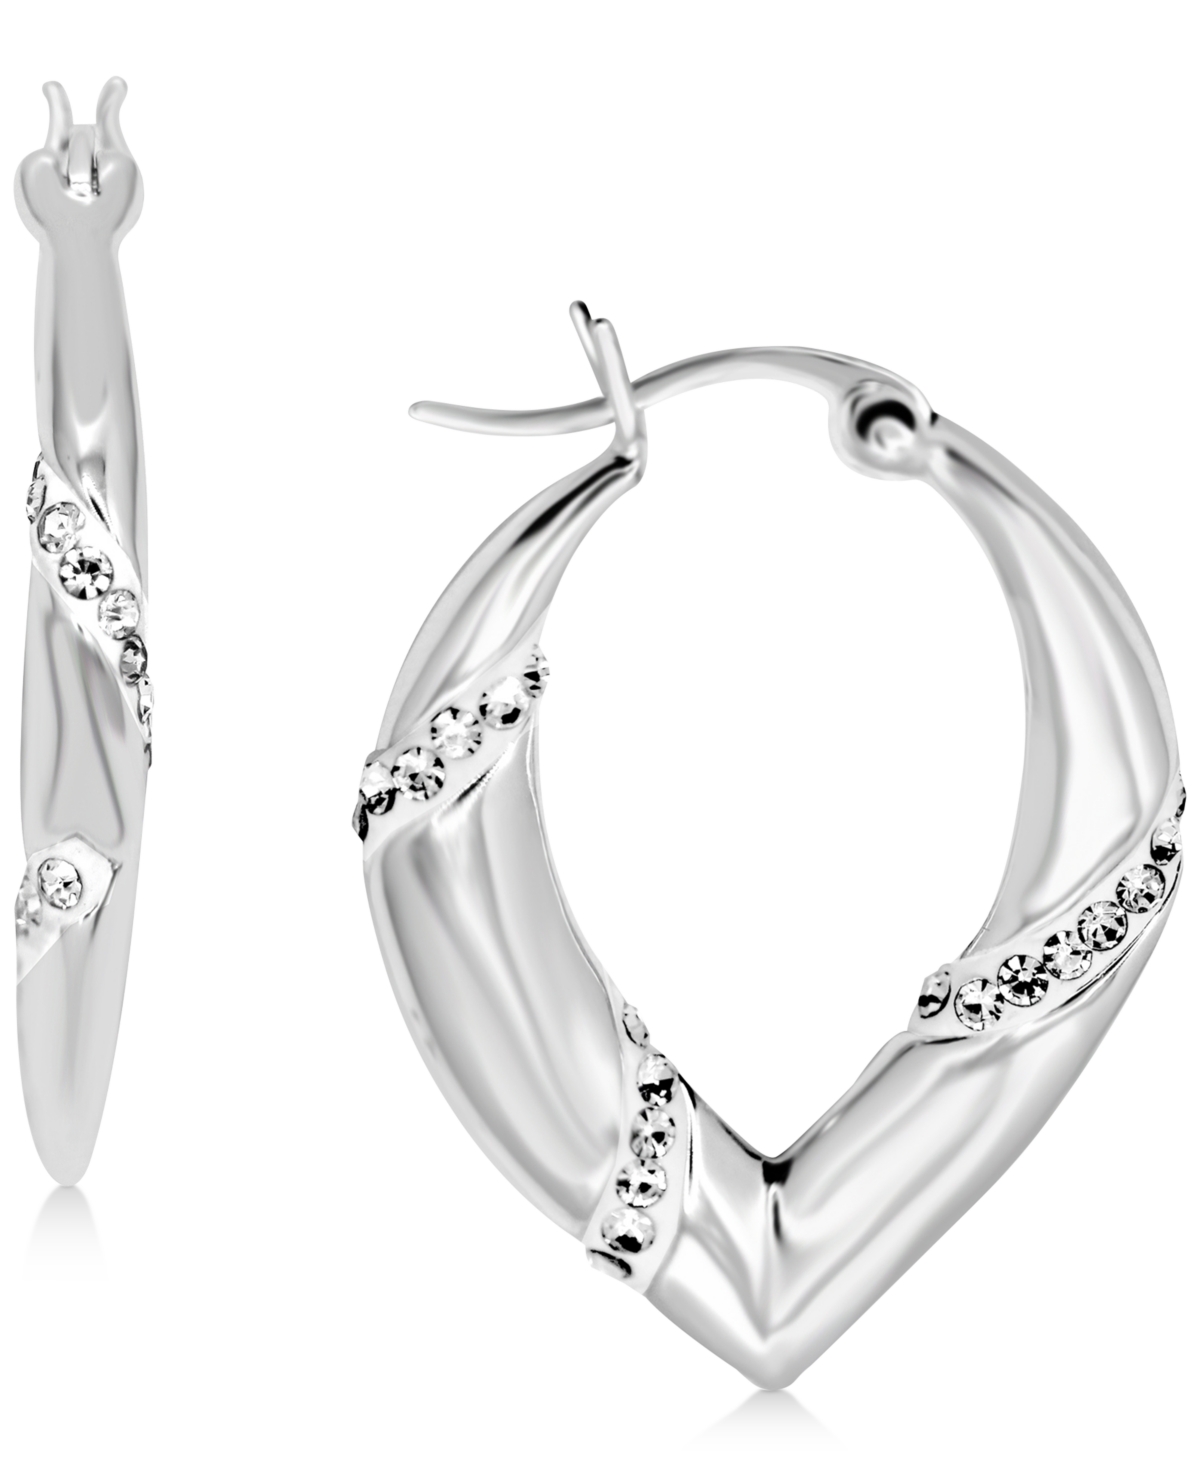 Crystal Chevron Hoop Earrings in Silver-Plate - Silver